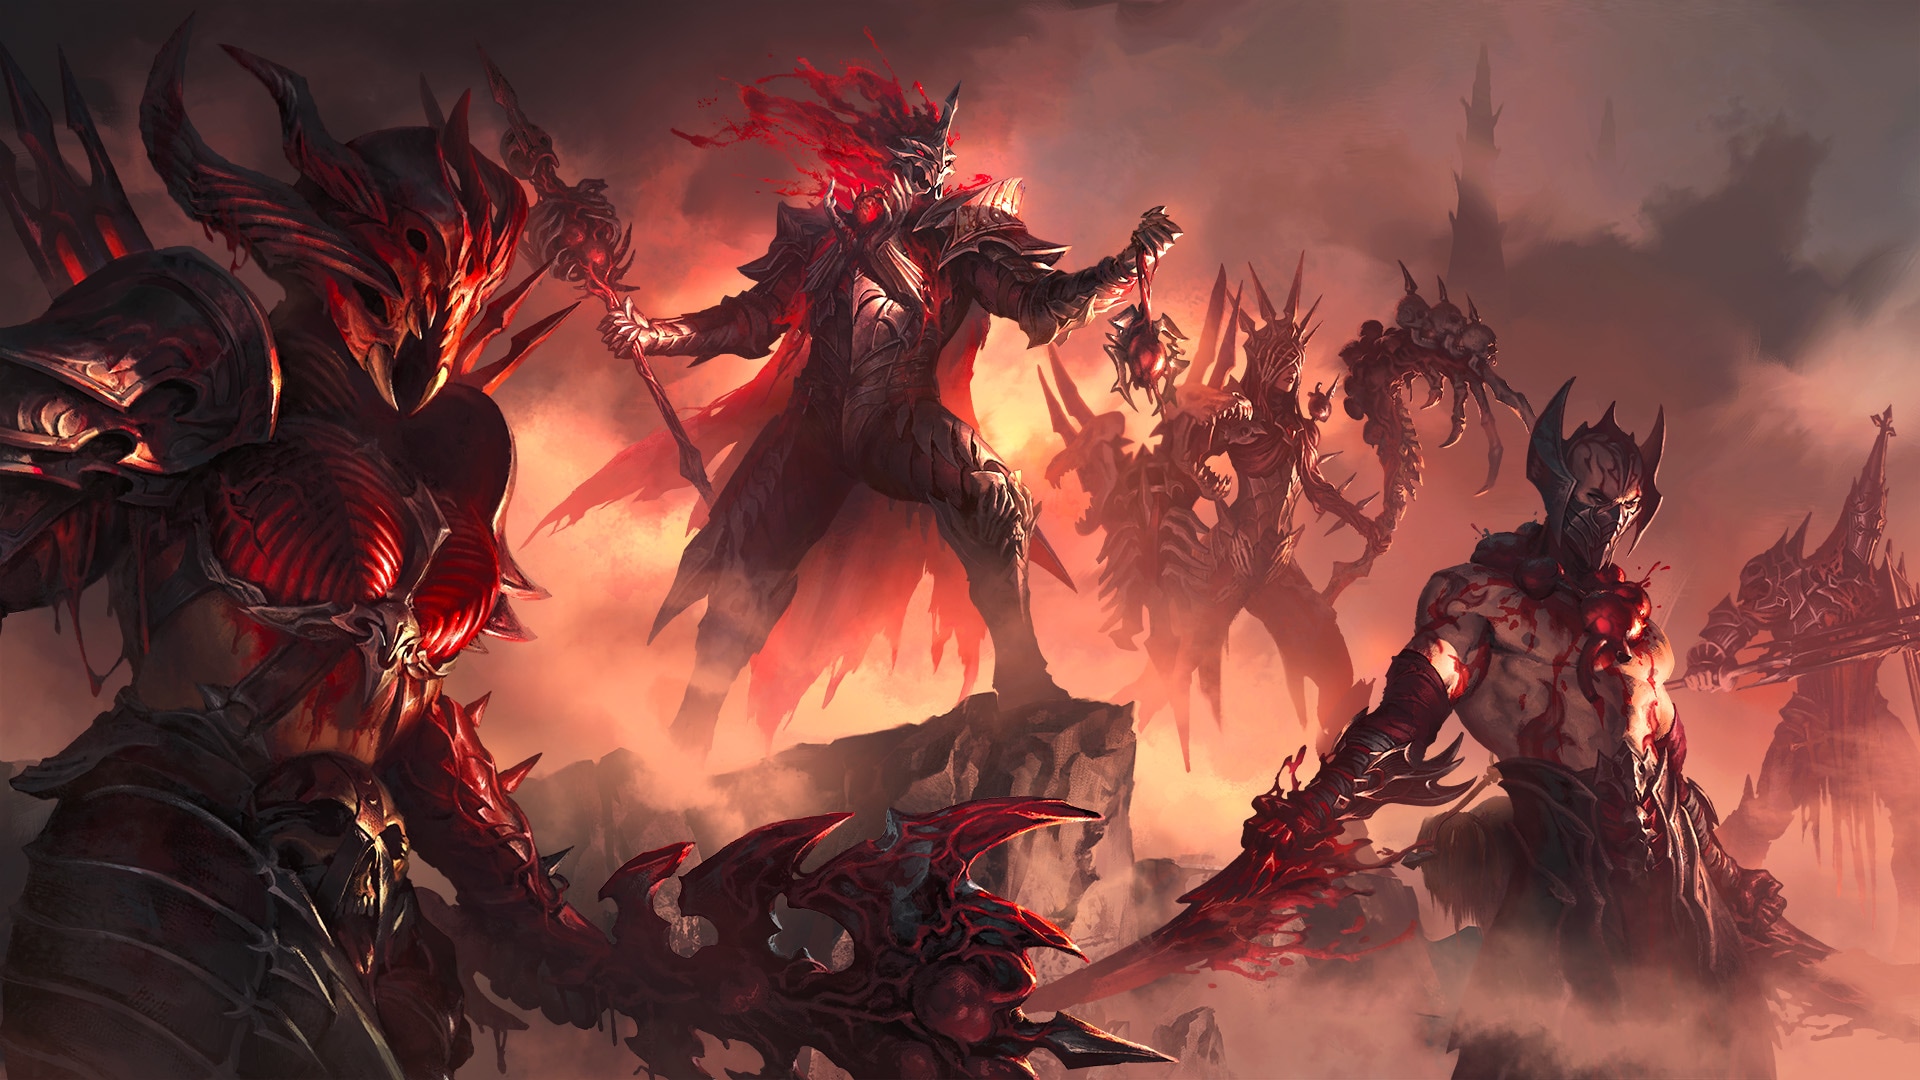 Could Diablo Immortal's Blood Knight Class Come to Diablo 4?